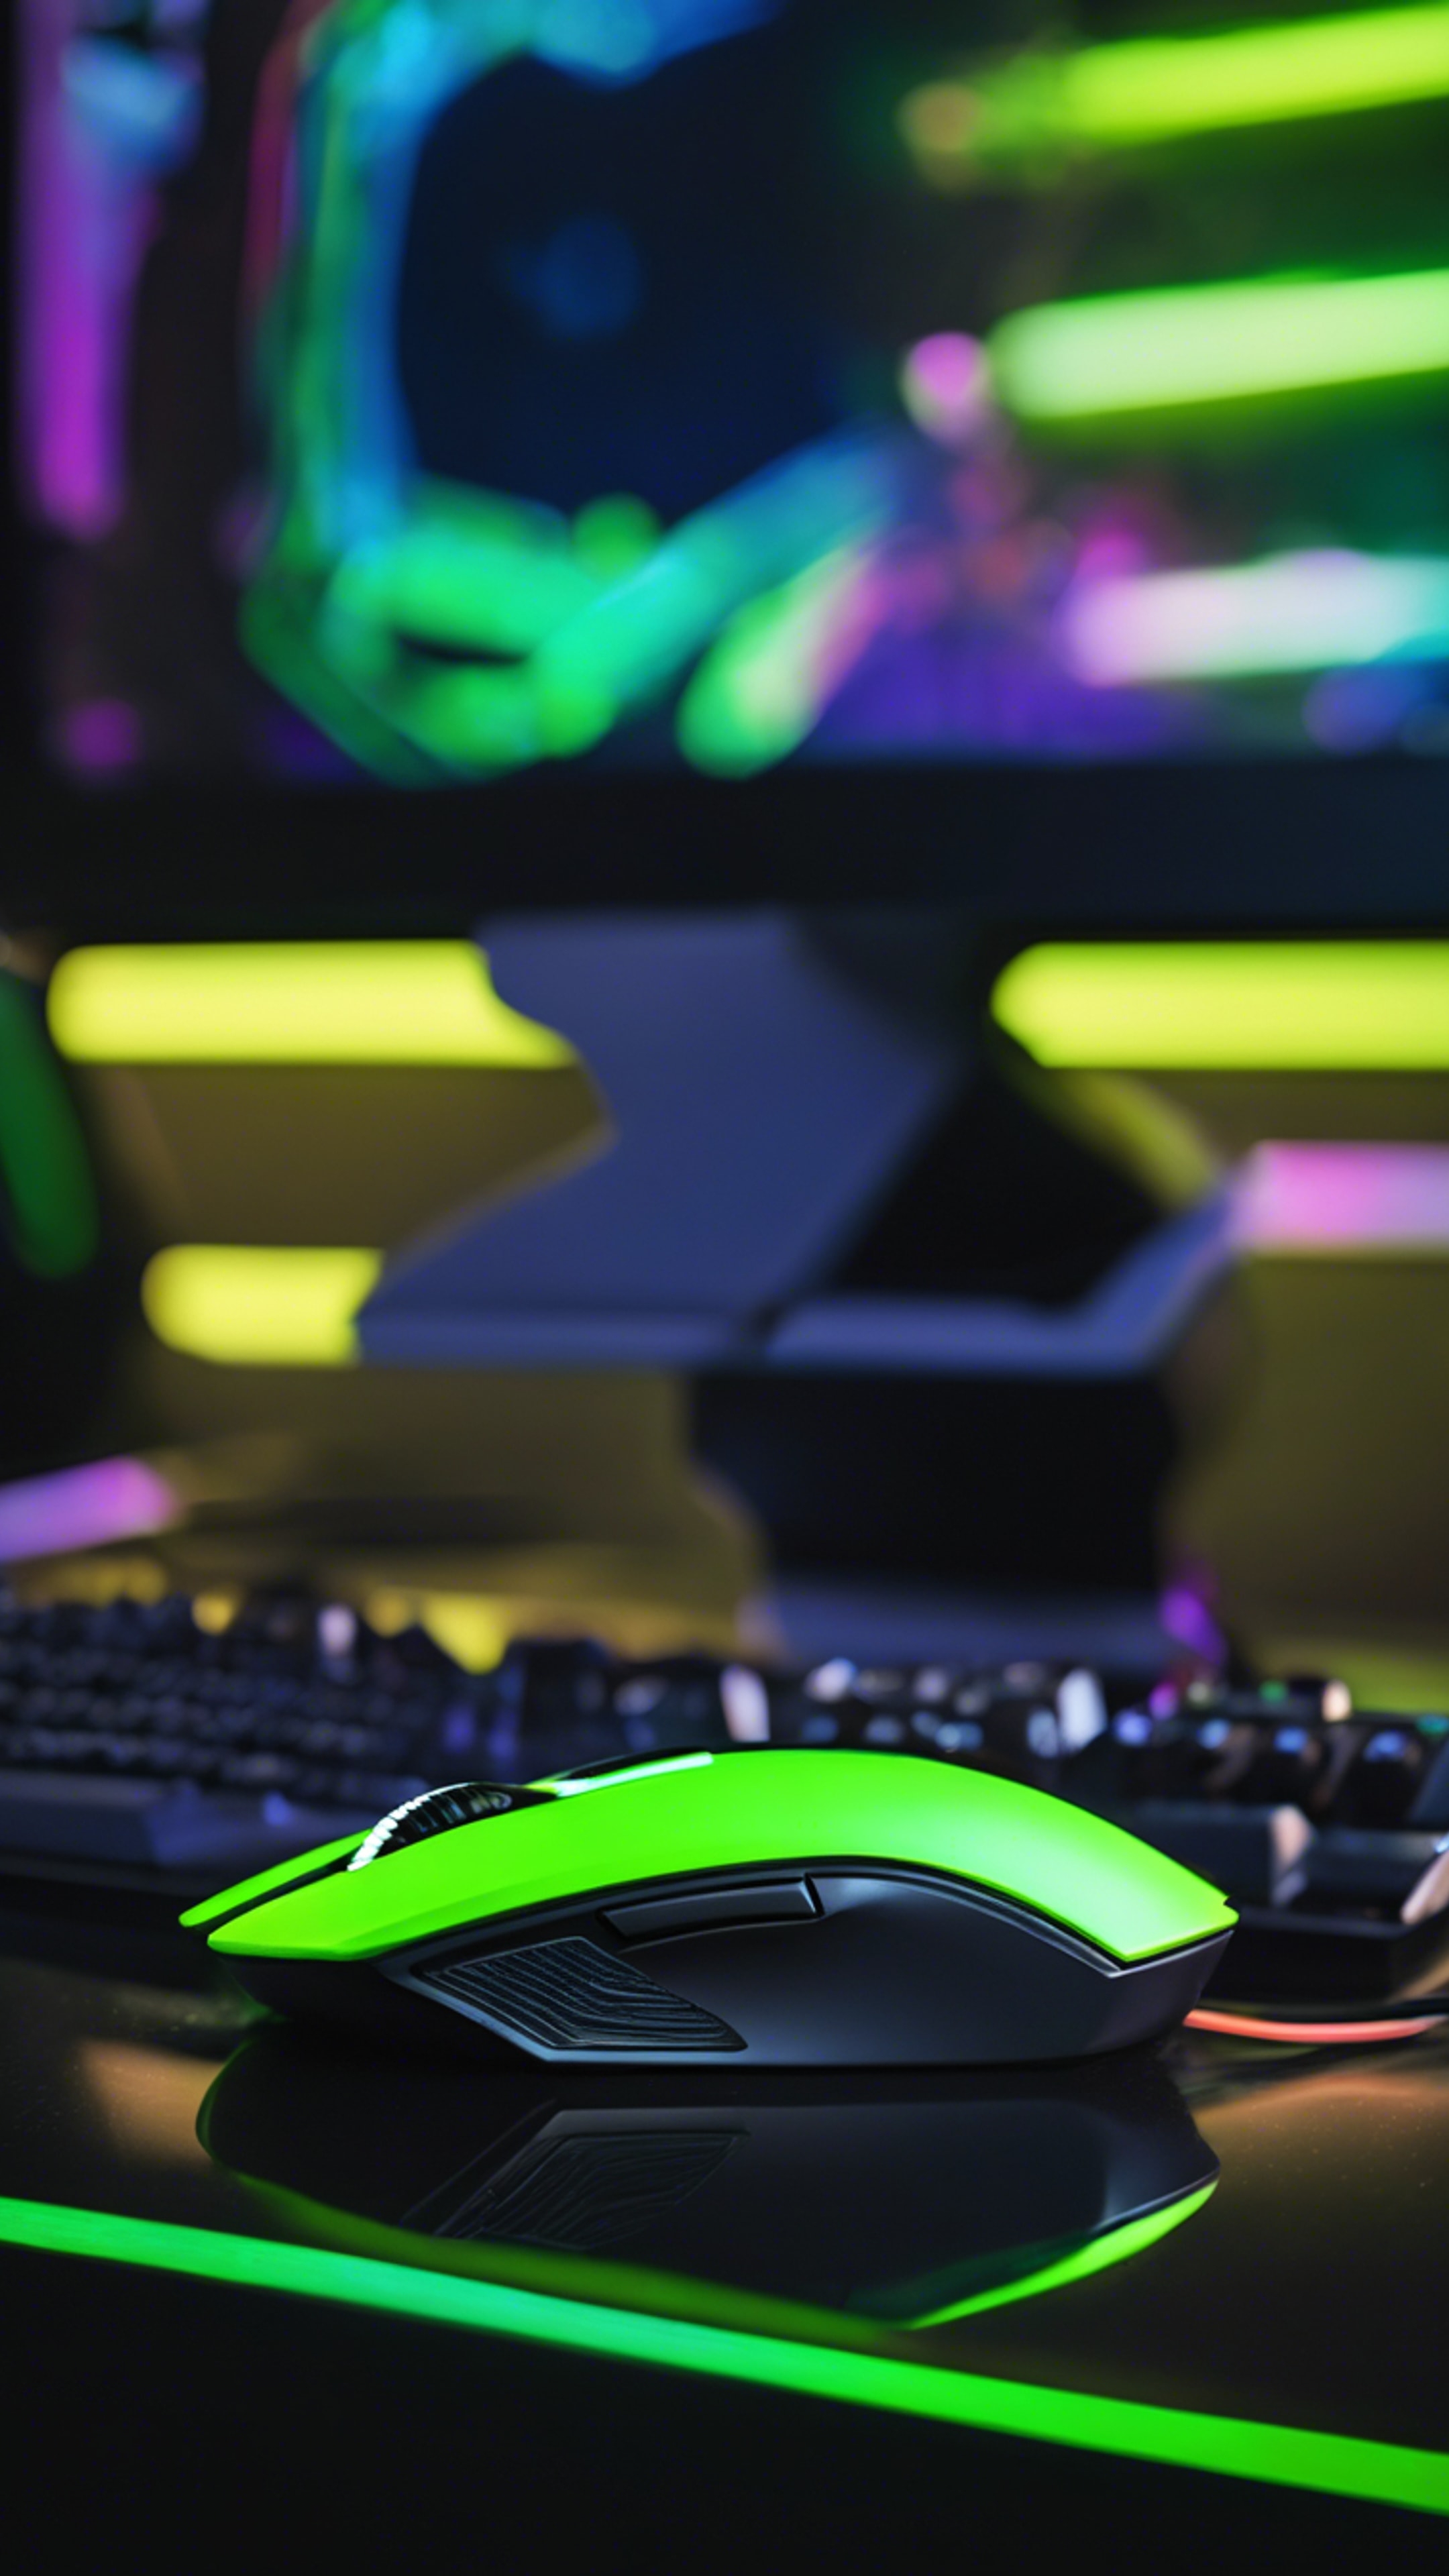 A cool neon green high-tech gaming mouse on a futuristic black desk setup. Tapeta[6d2a2b9049aa4c81a995]